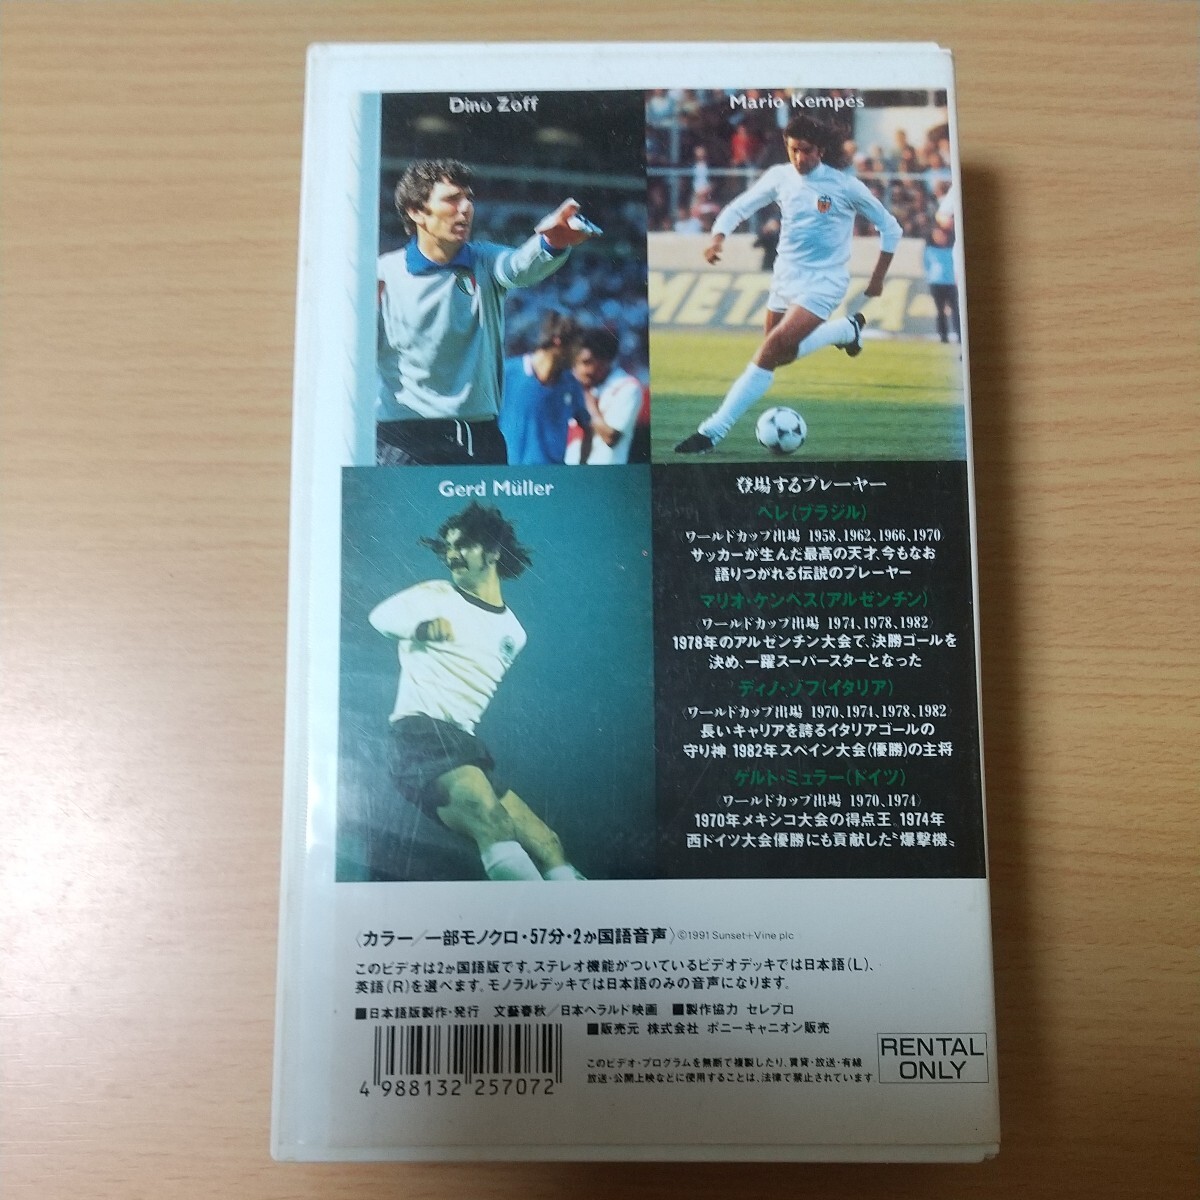  World Cup футбол super Star Ⅲ VHS видео Pele талон peszofmyula- в аренду выше товар воспроизведение подтверждено 